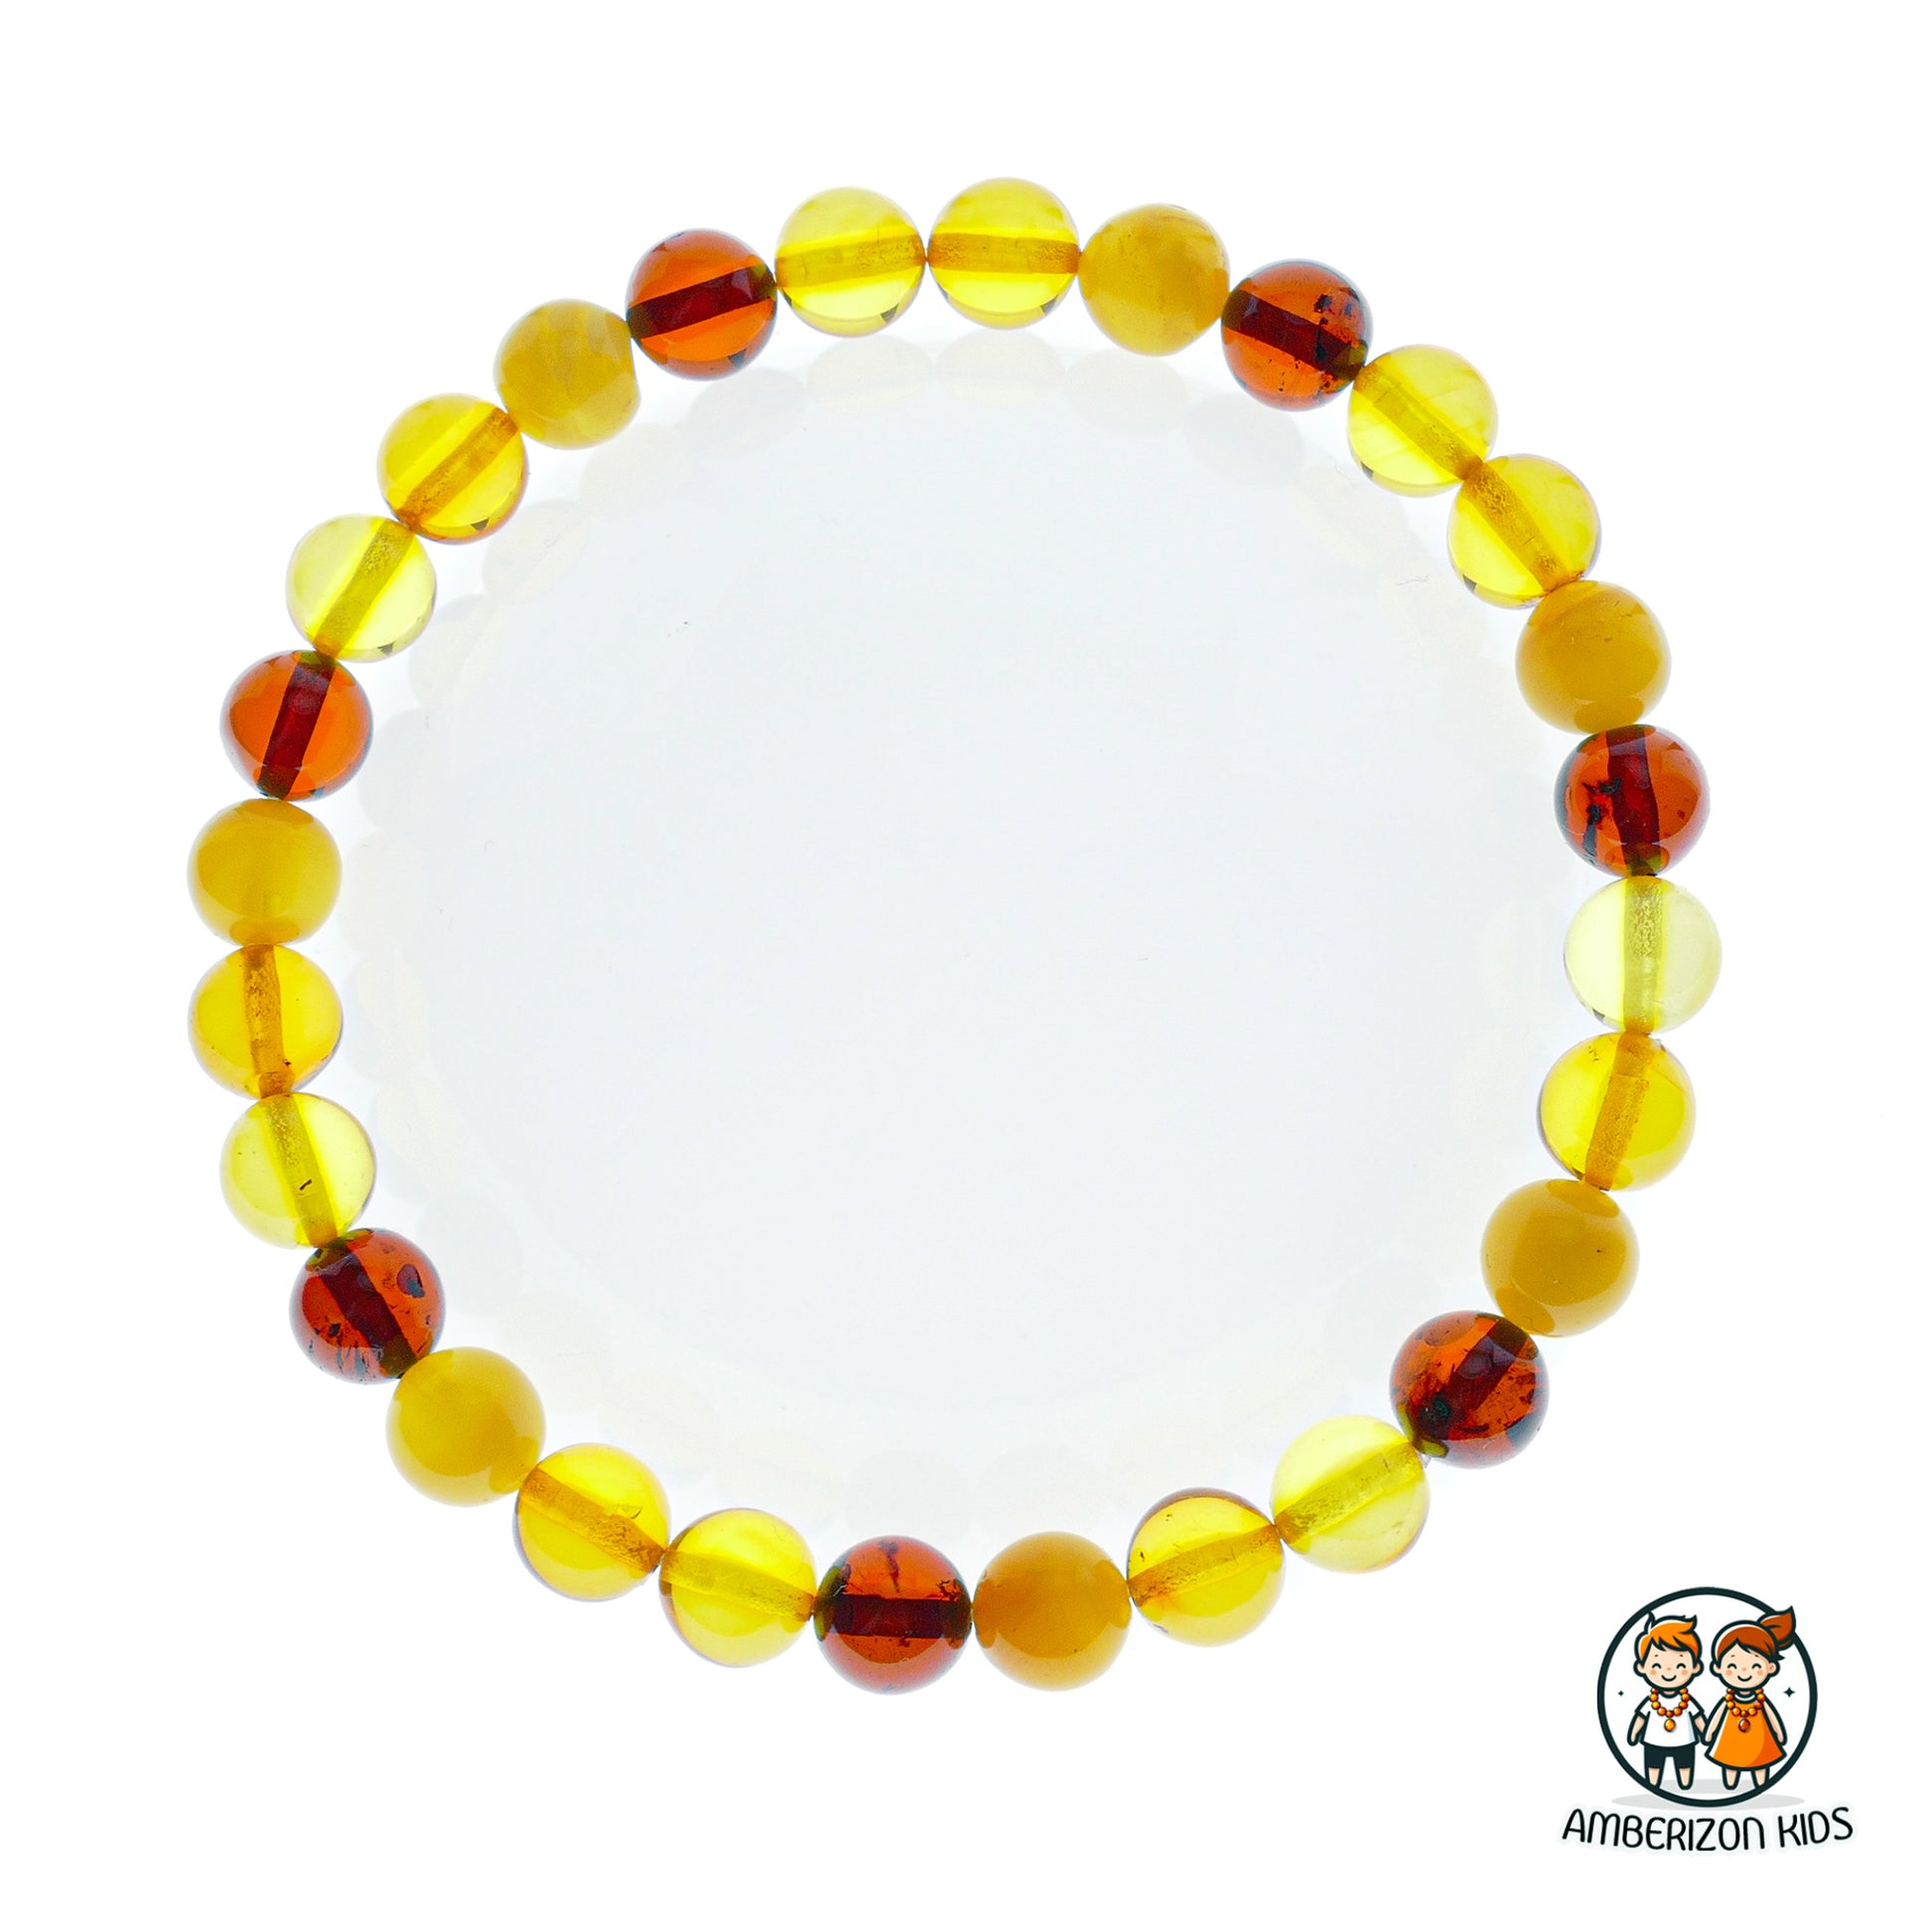 ⌀5.5mm - Premium round amber baby bracelet - Multicolored polished amber balls